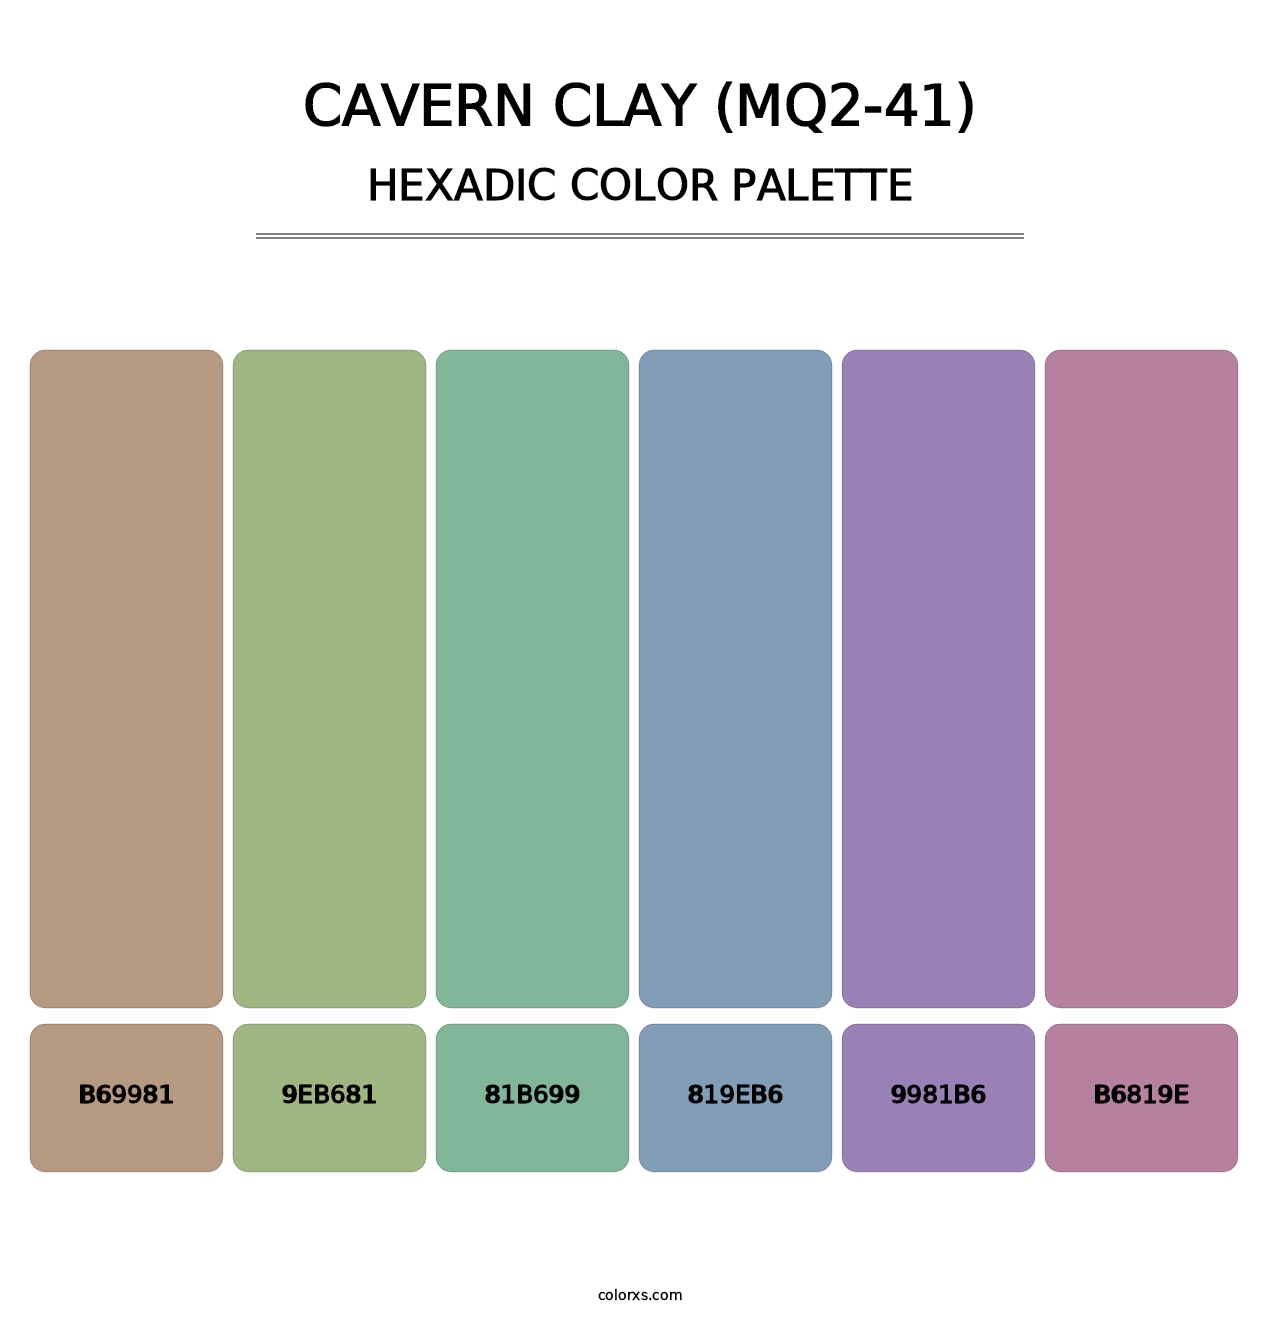 Cavern Clay (MQ2-41) - Hexadic Color Palette